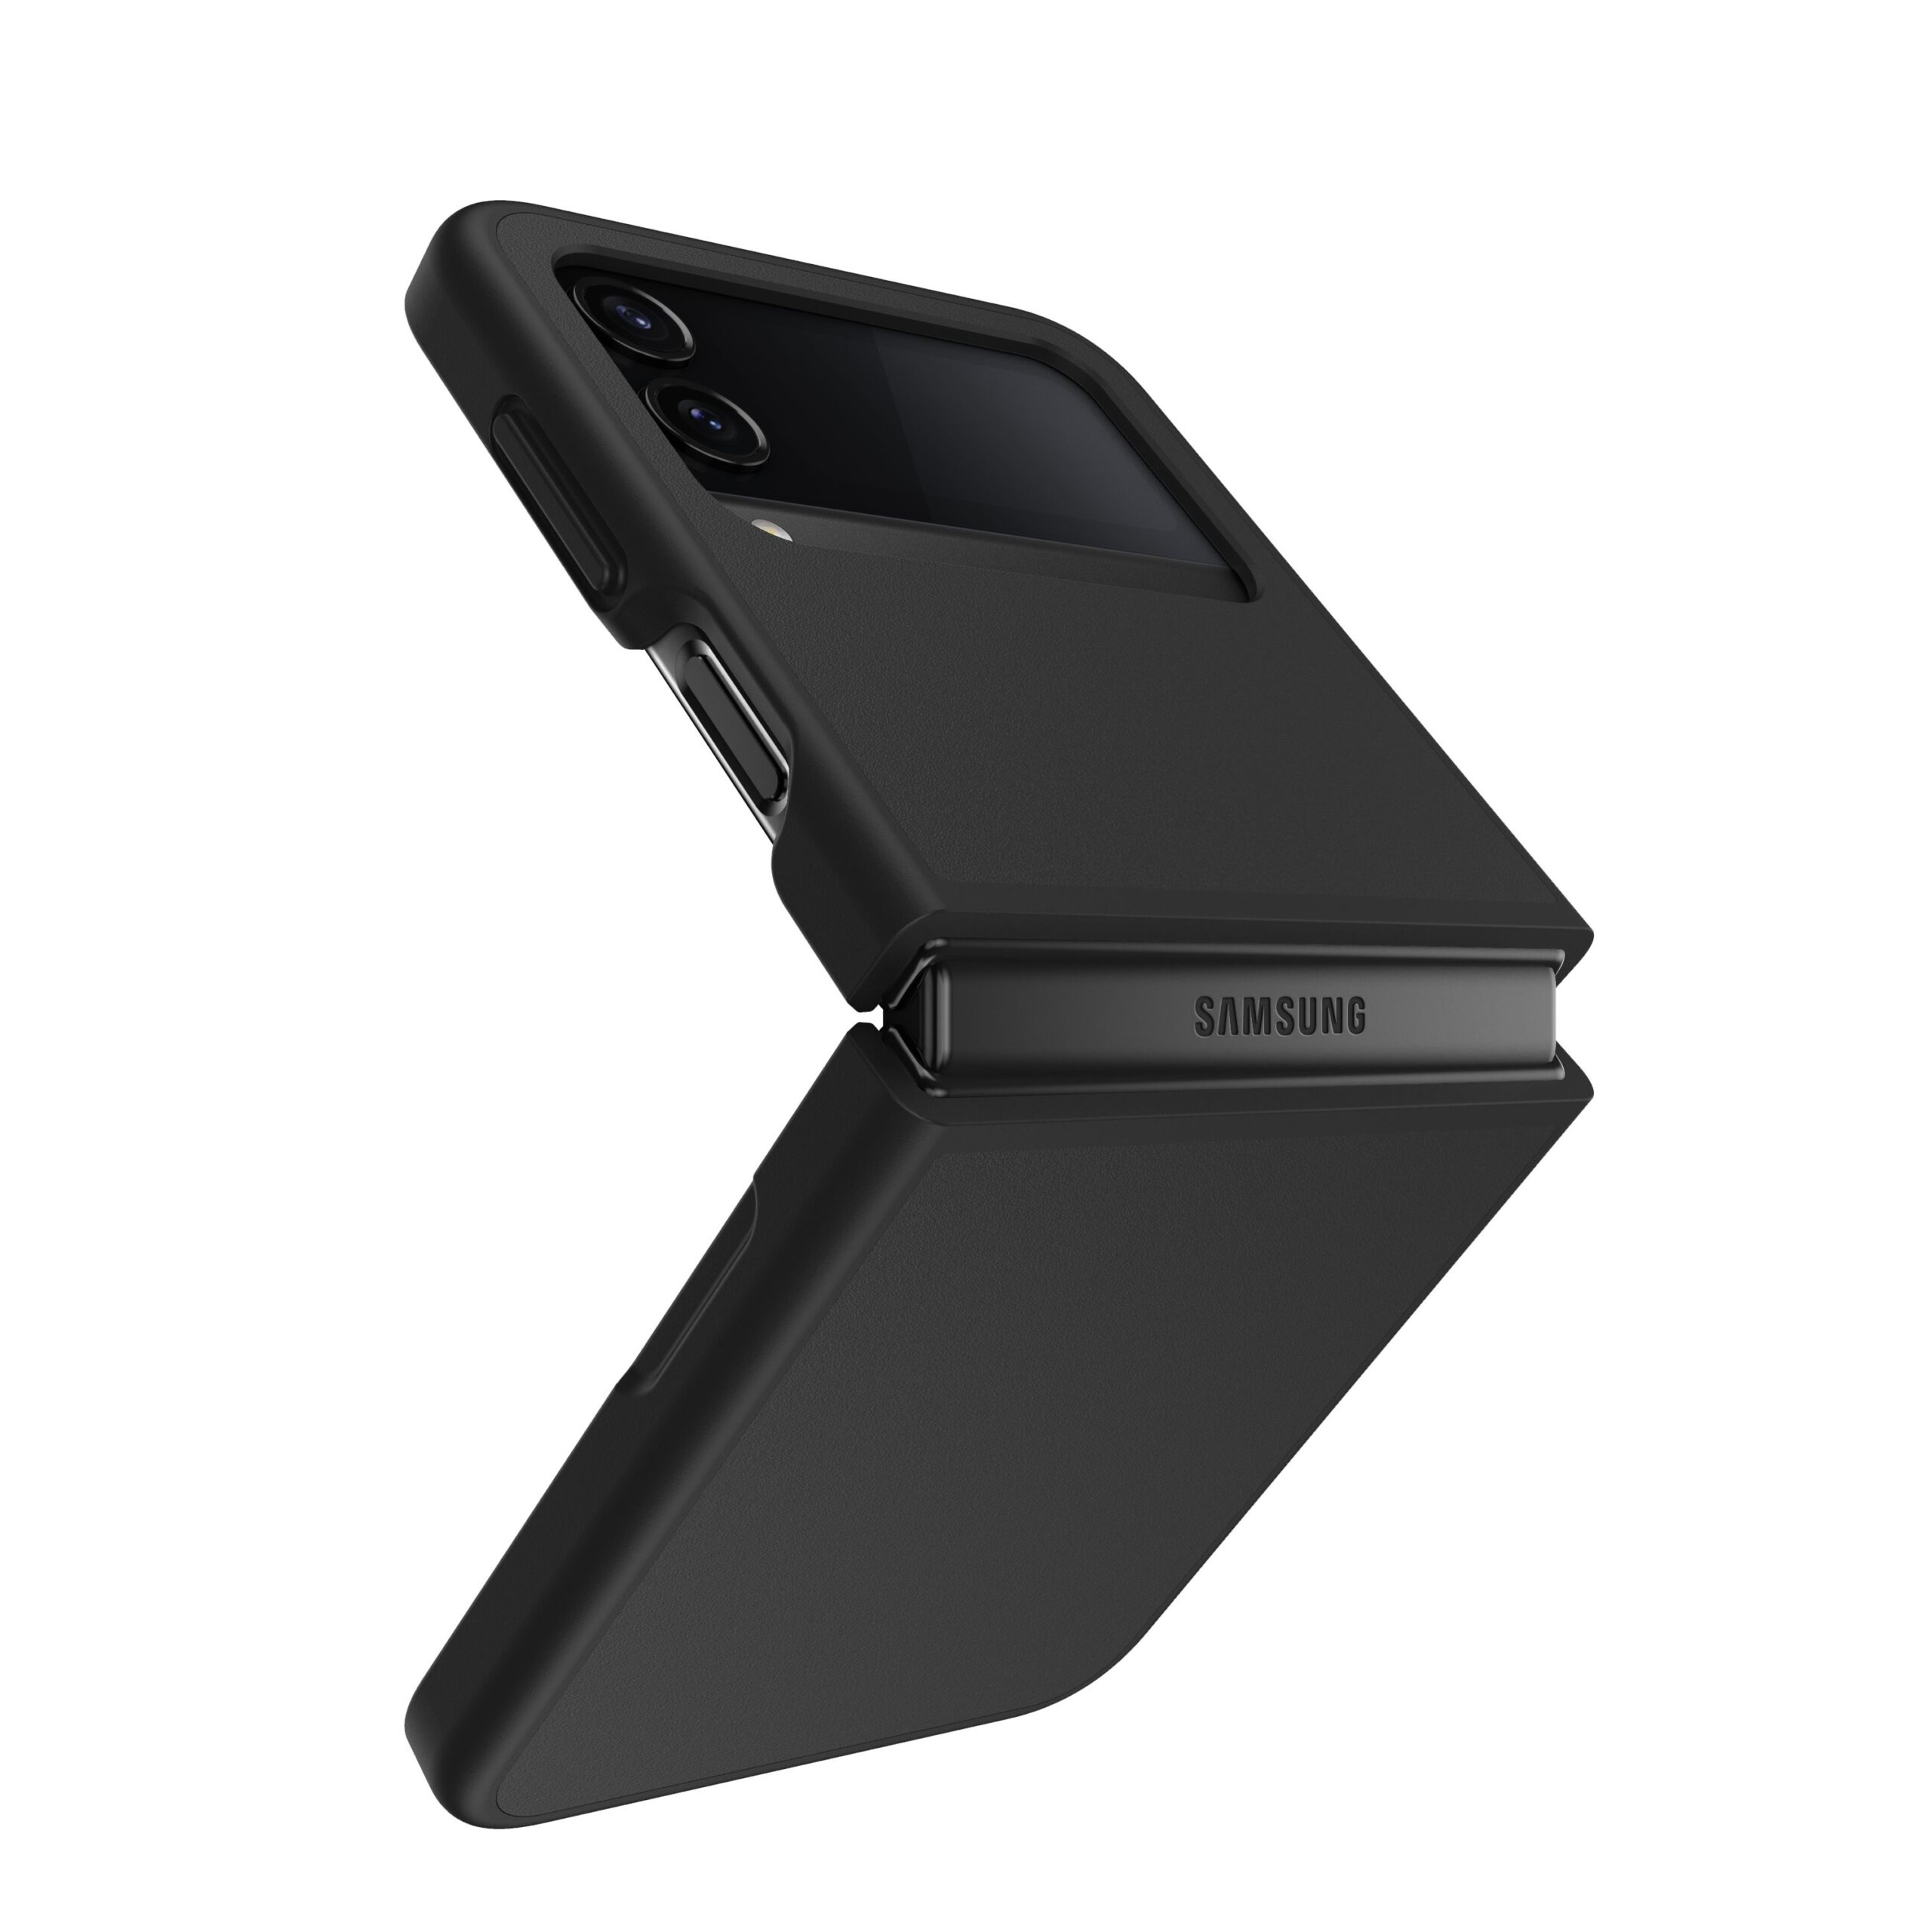 OtterBox รุ่น Thin Flex - เคส Galaxy Z Flip 4 - สีดำ